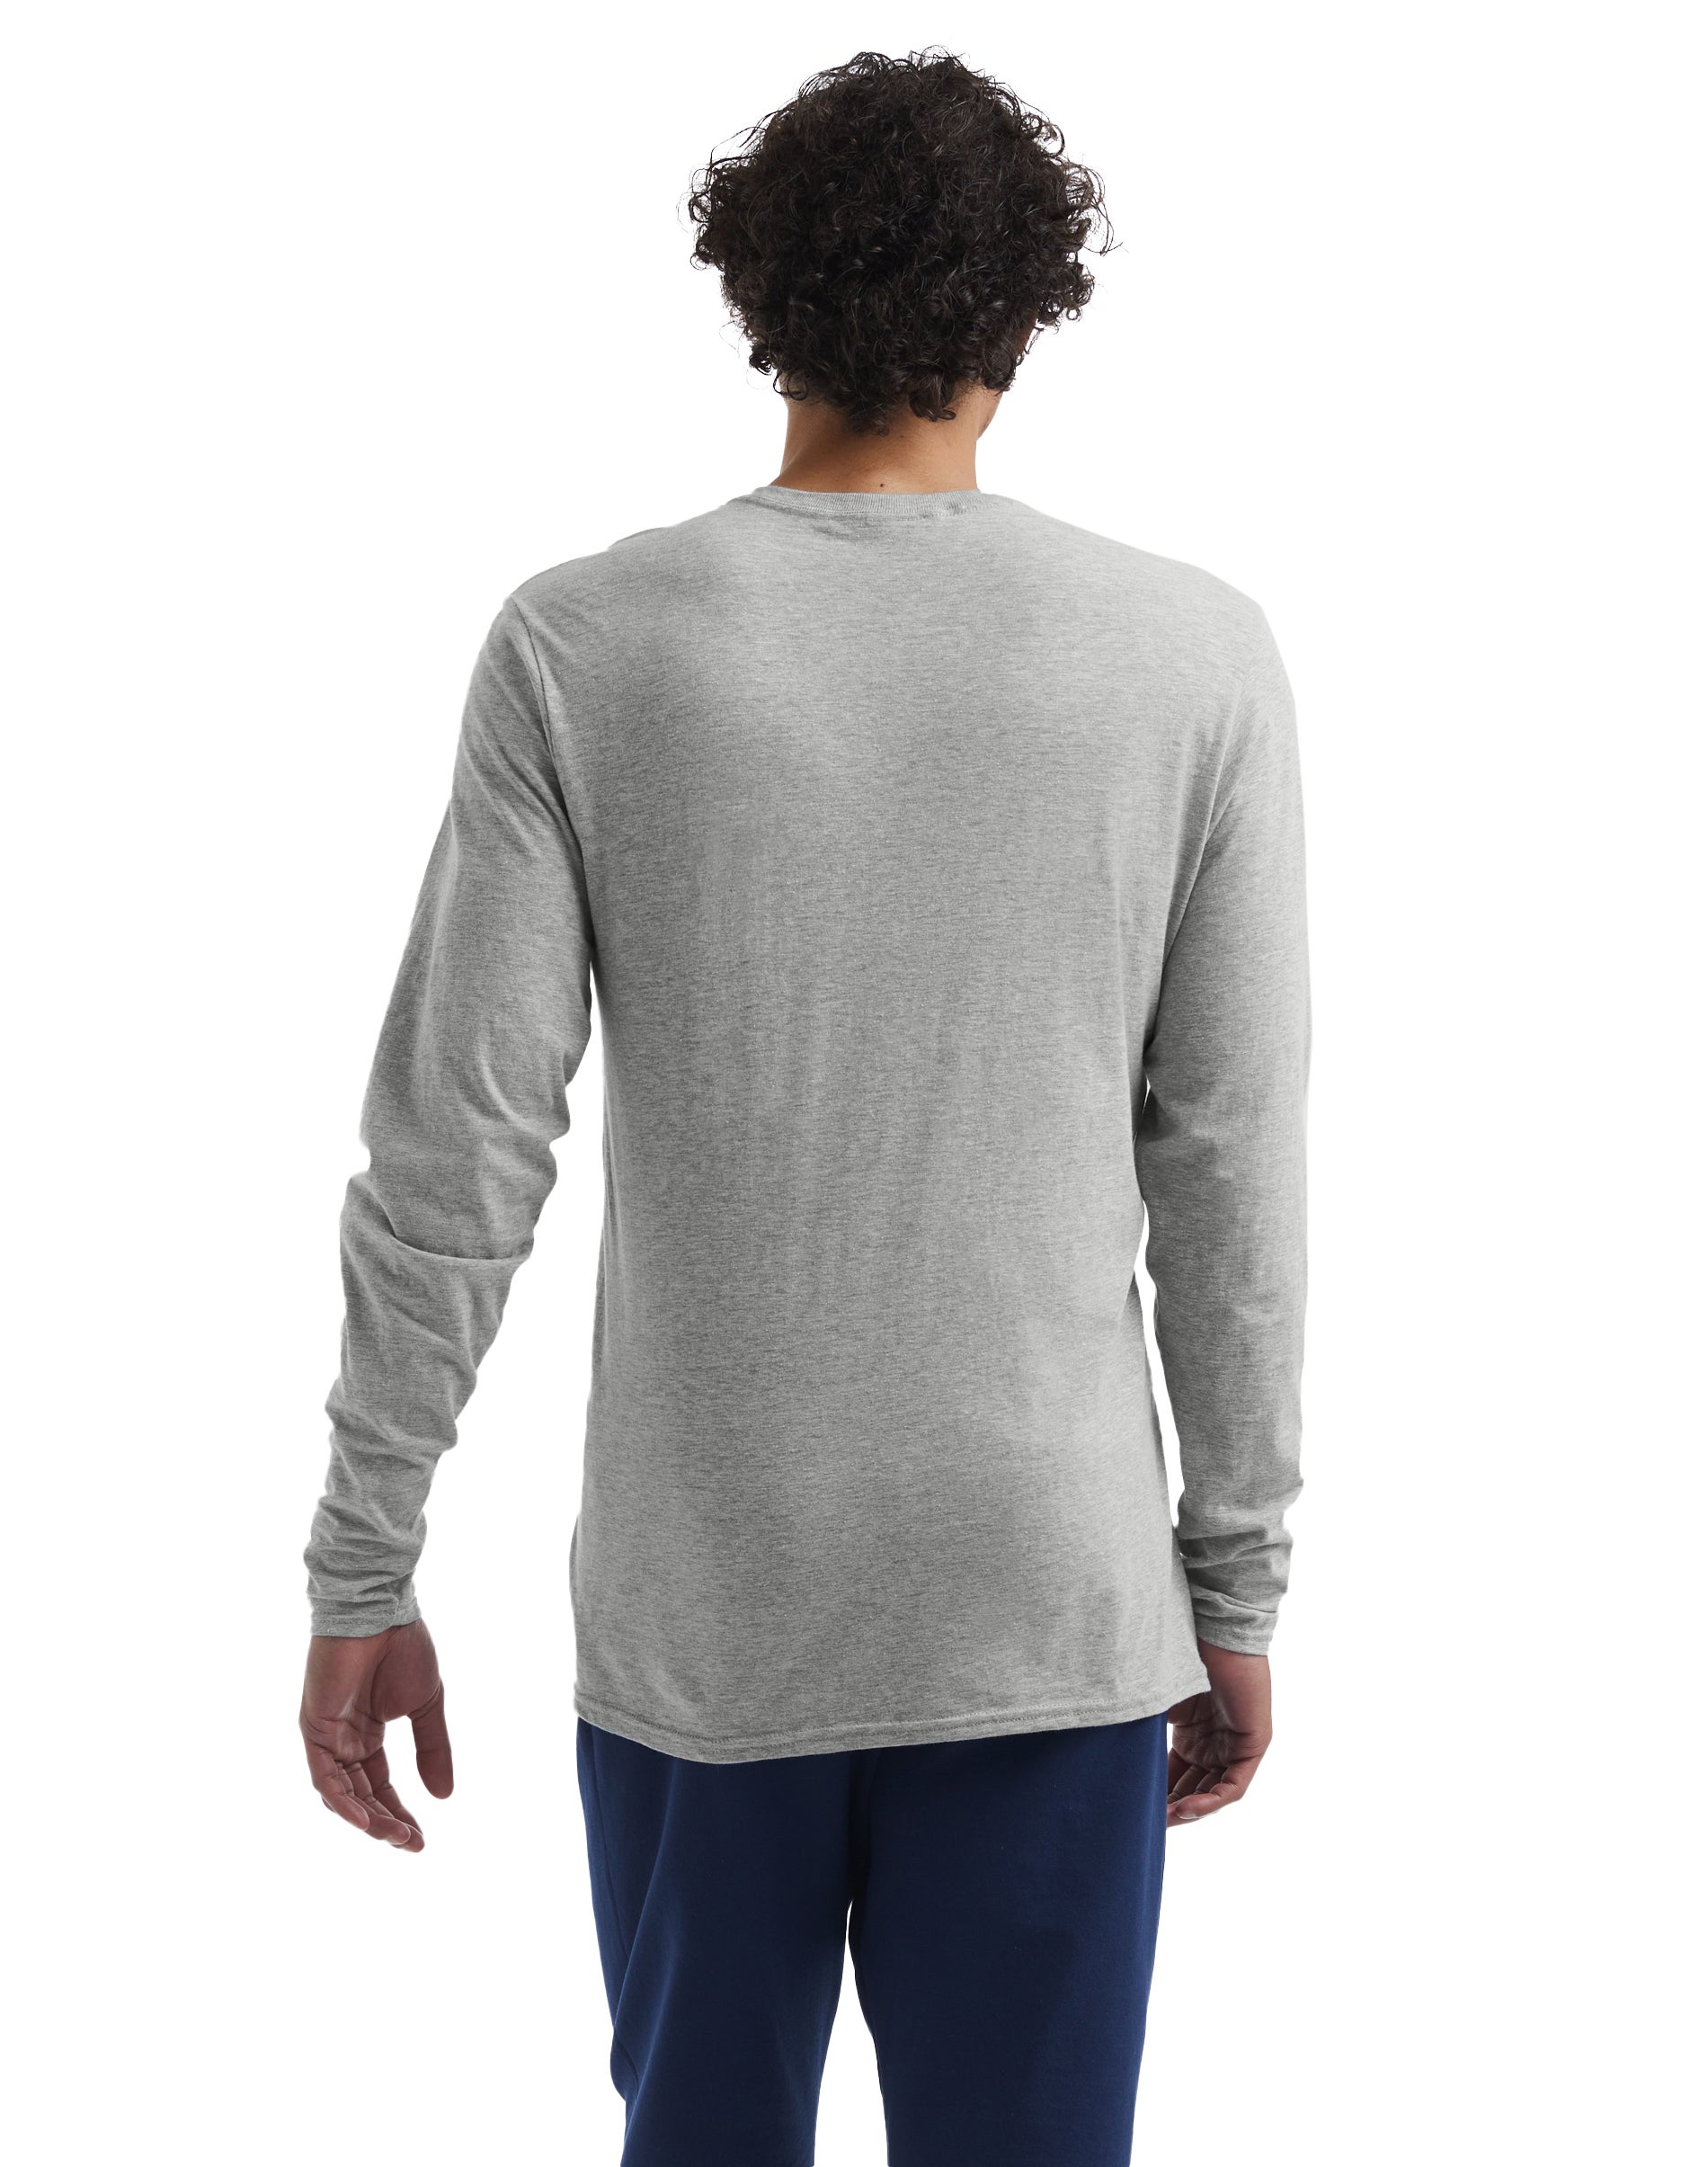 Hanes Men's Perfect-T Long Sleeve T-Shirt Ash S - image 3 of 8